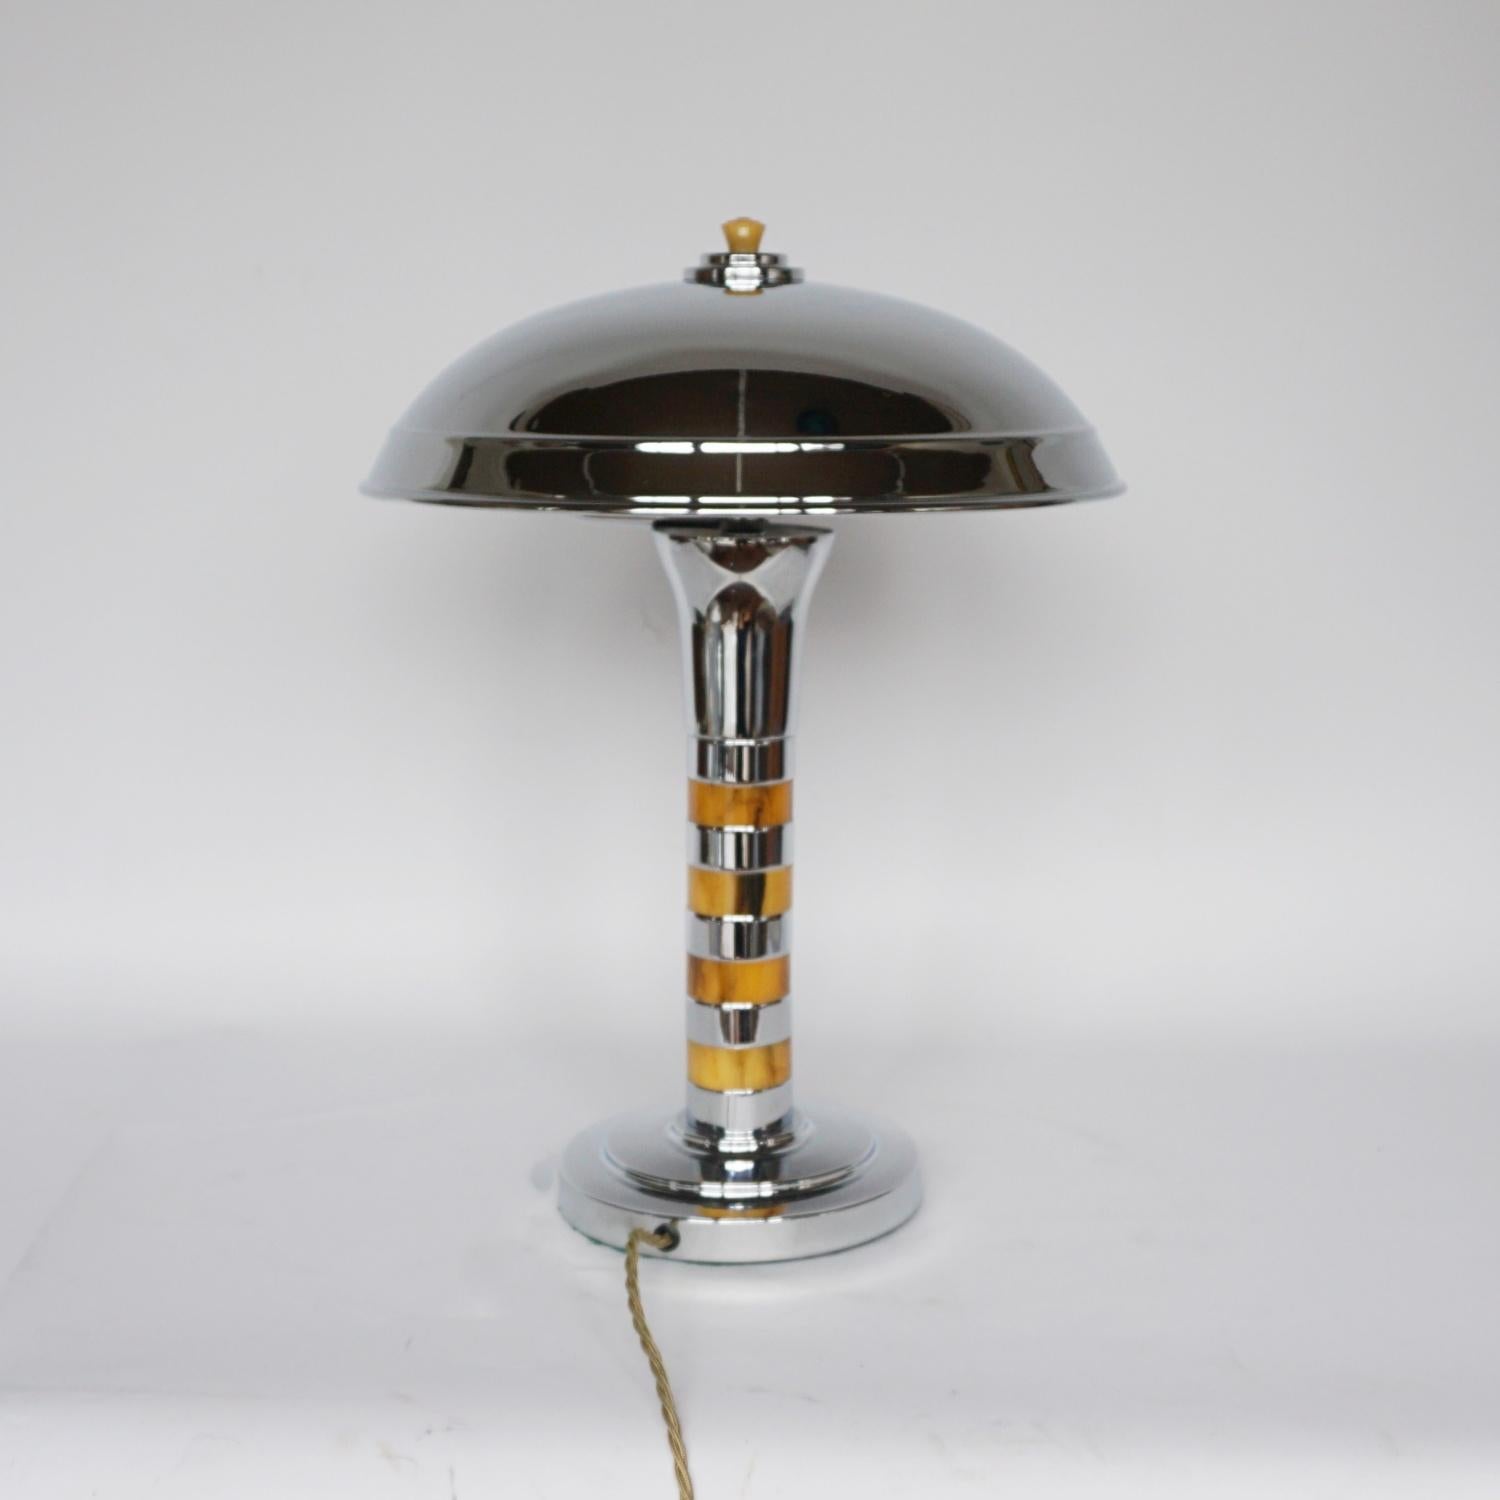 Art déco Metal Art Deco Bakelite and Chromed Metal Dome Lamp